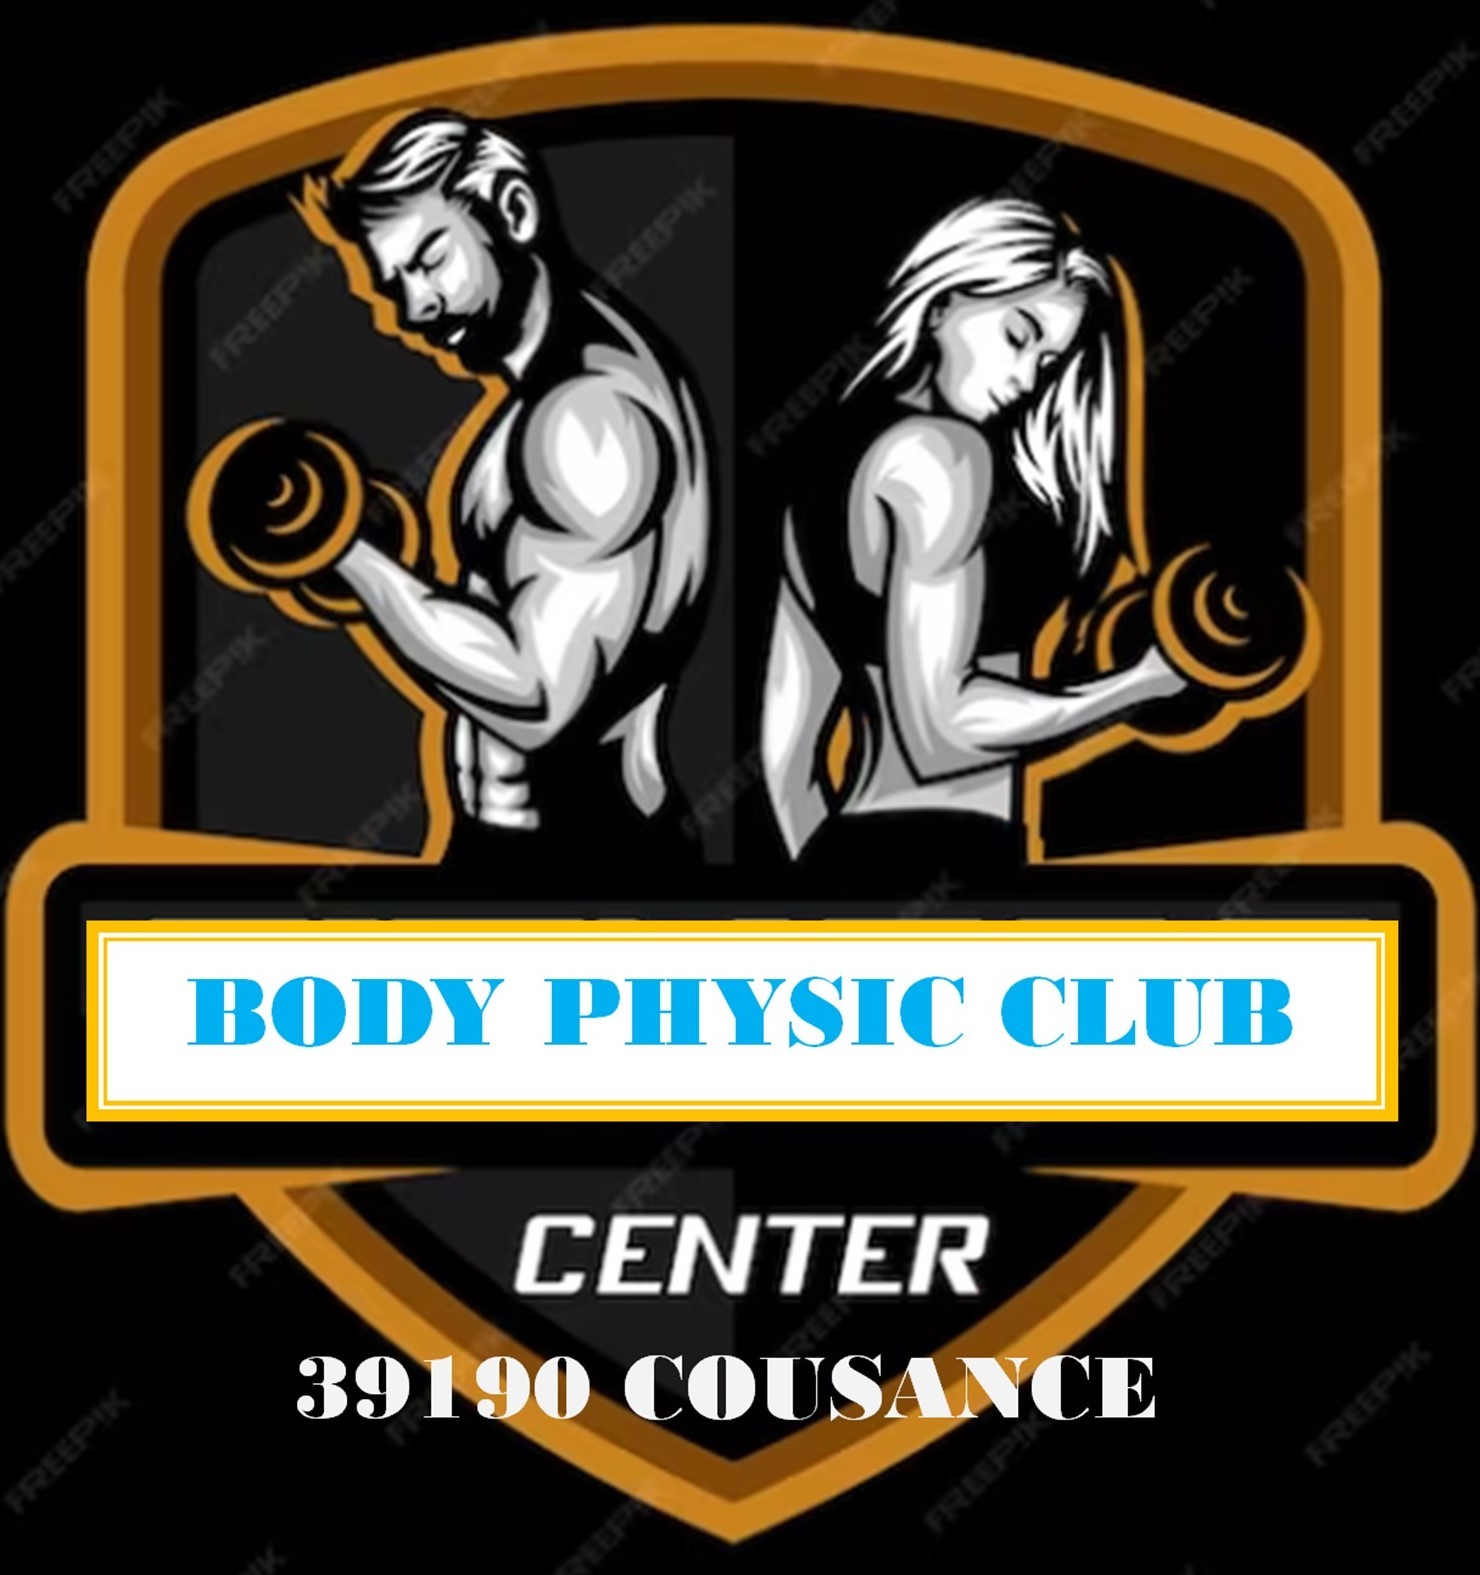 BODY PHYSIC CLUB 39 Cousance